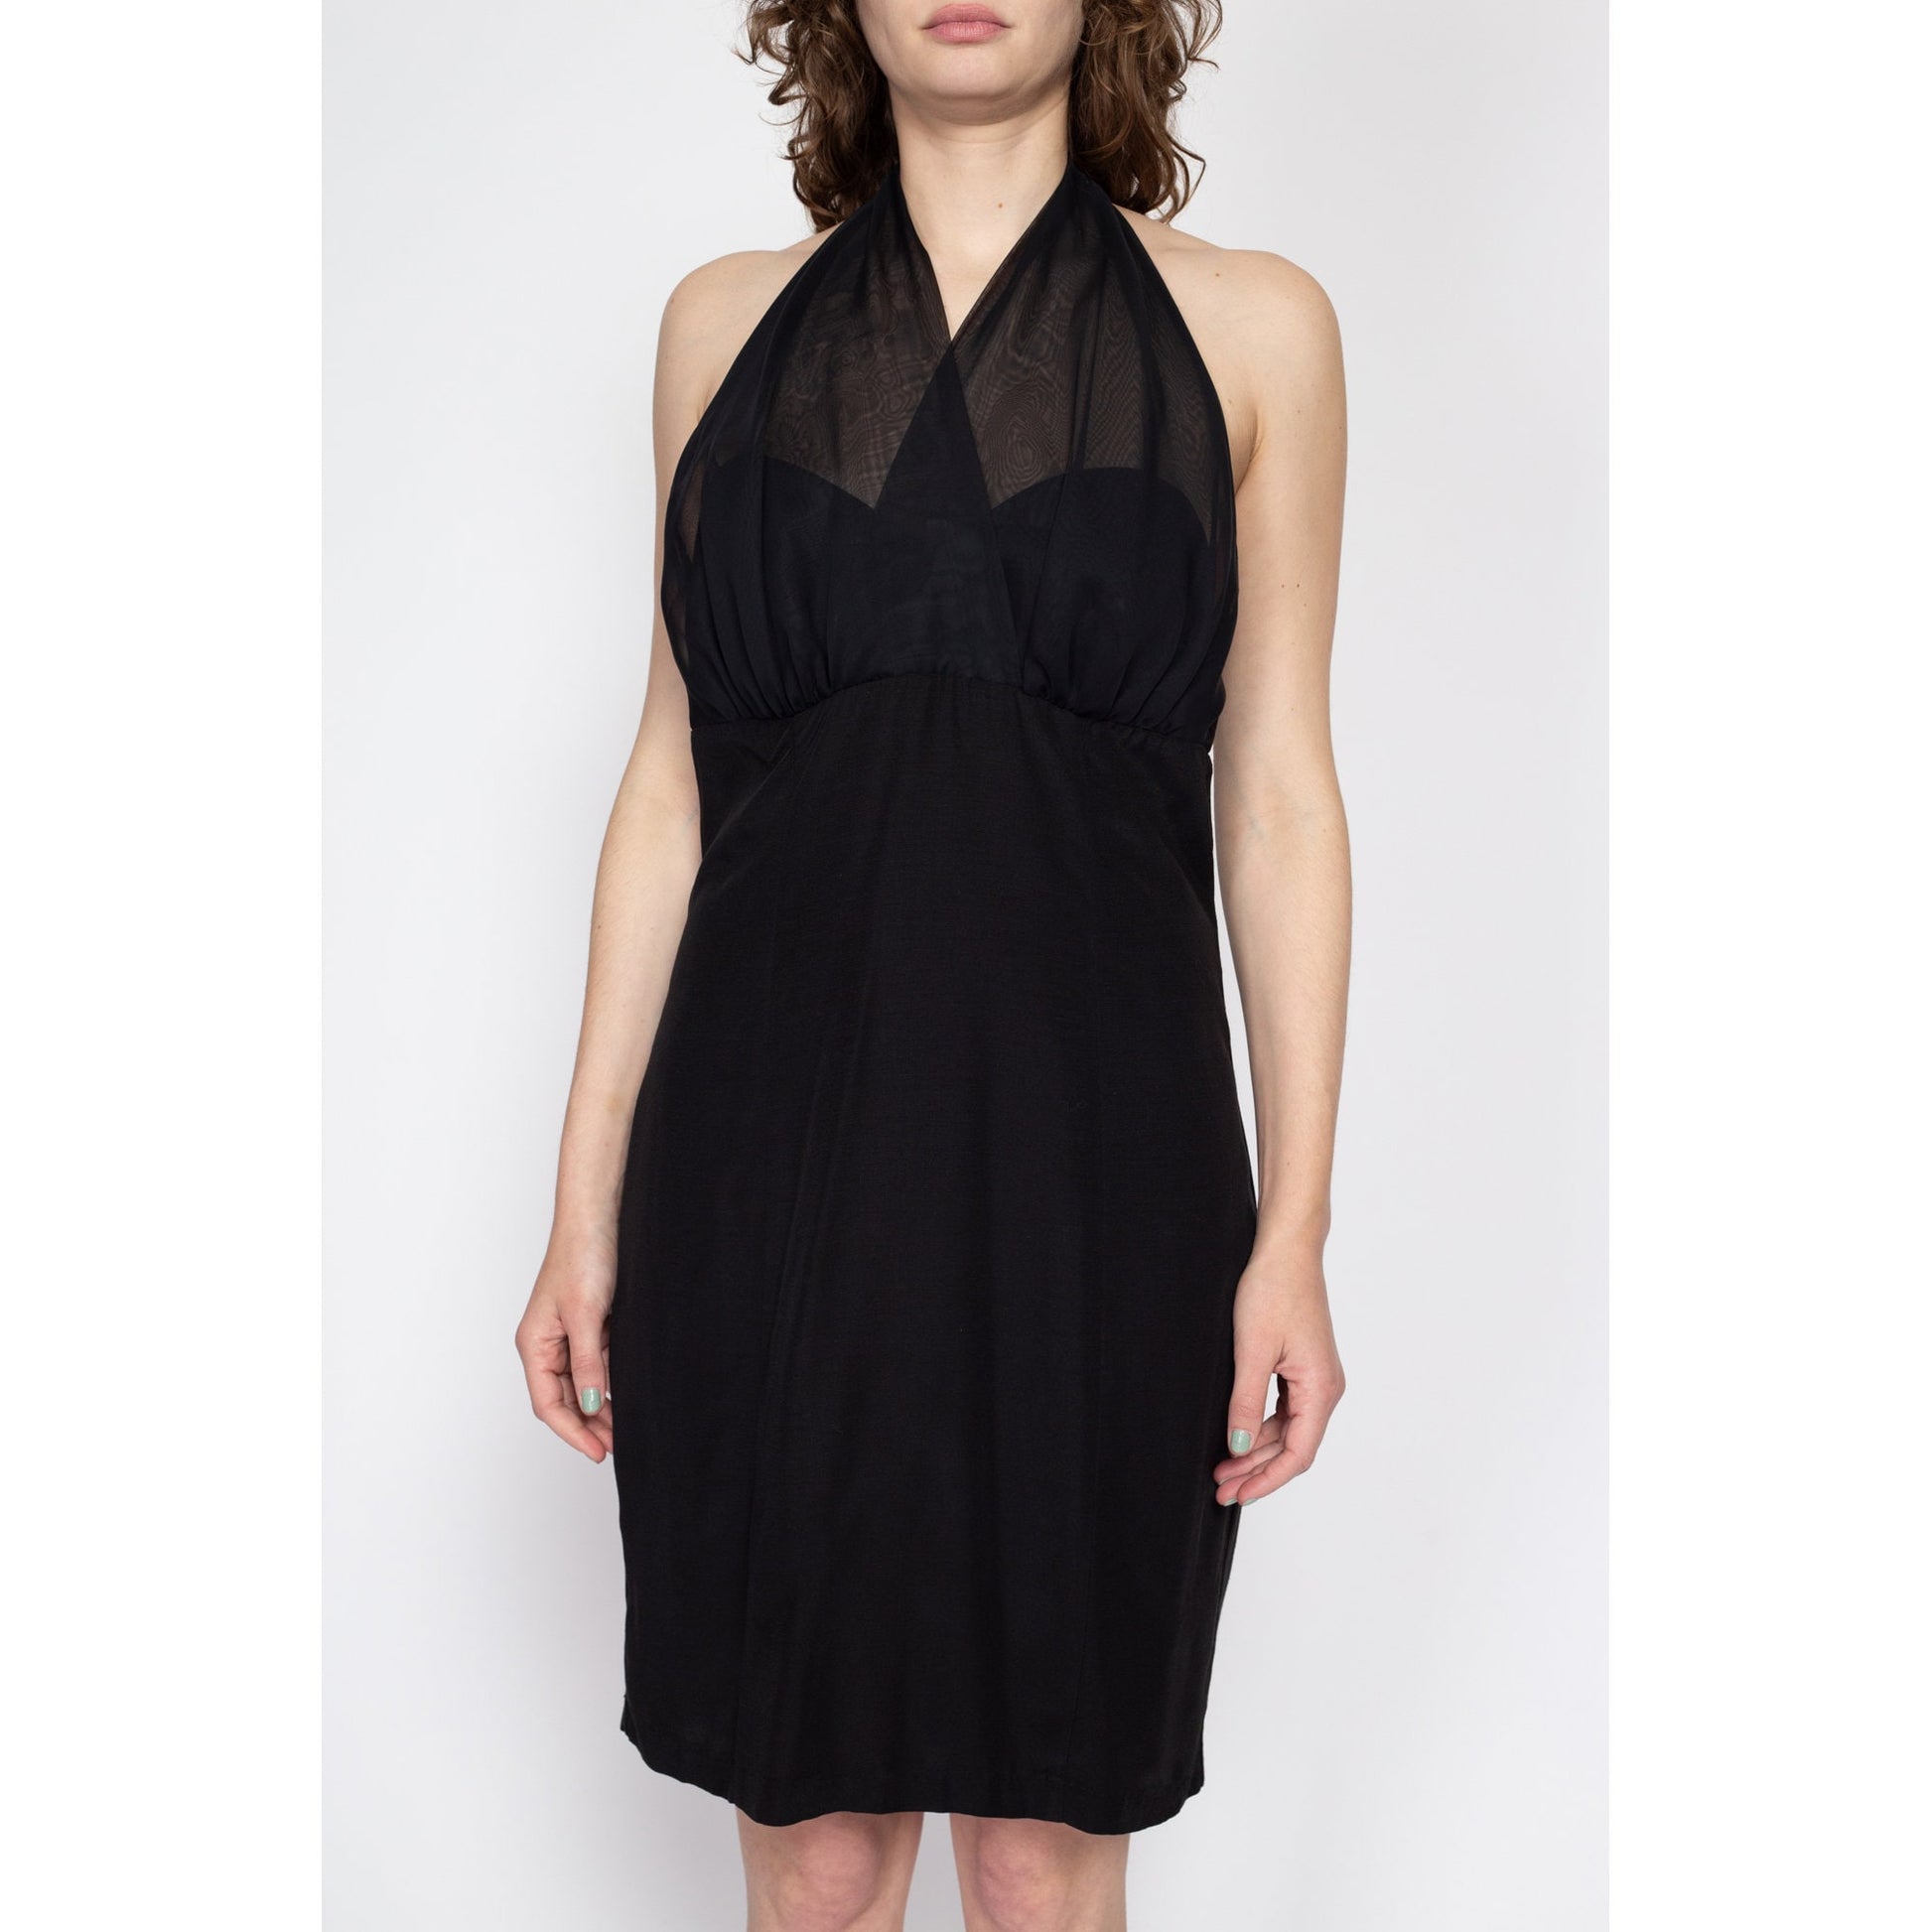 Large 90s Chiffon Halter Little Black Dress | Vintage Sleeveless Sheath Mini Party Dress